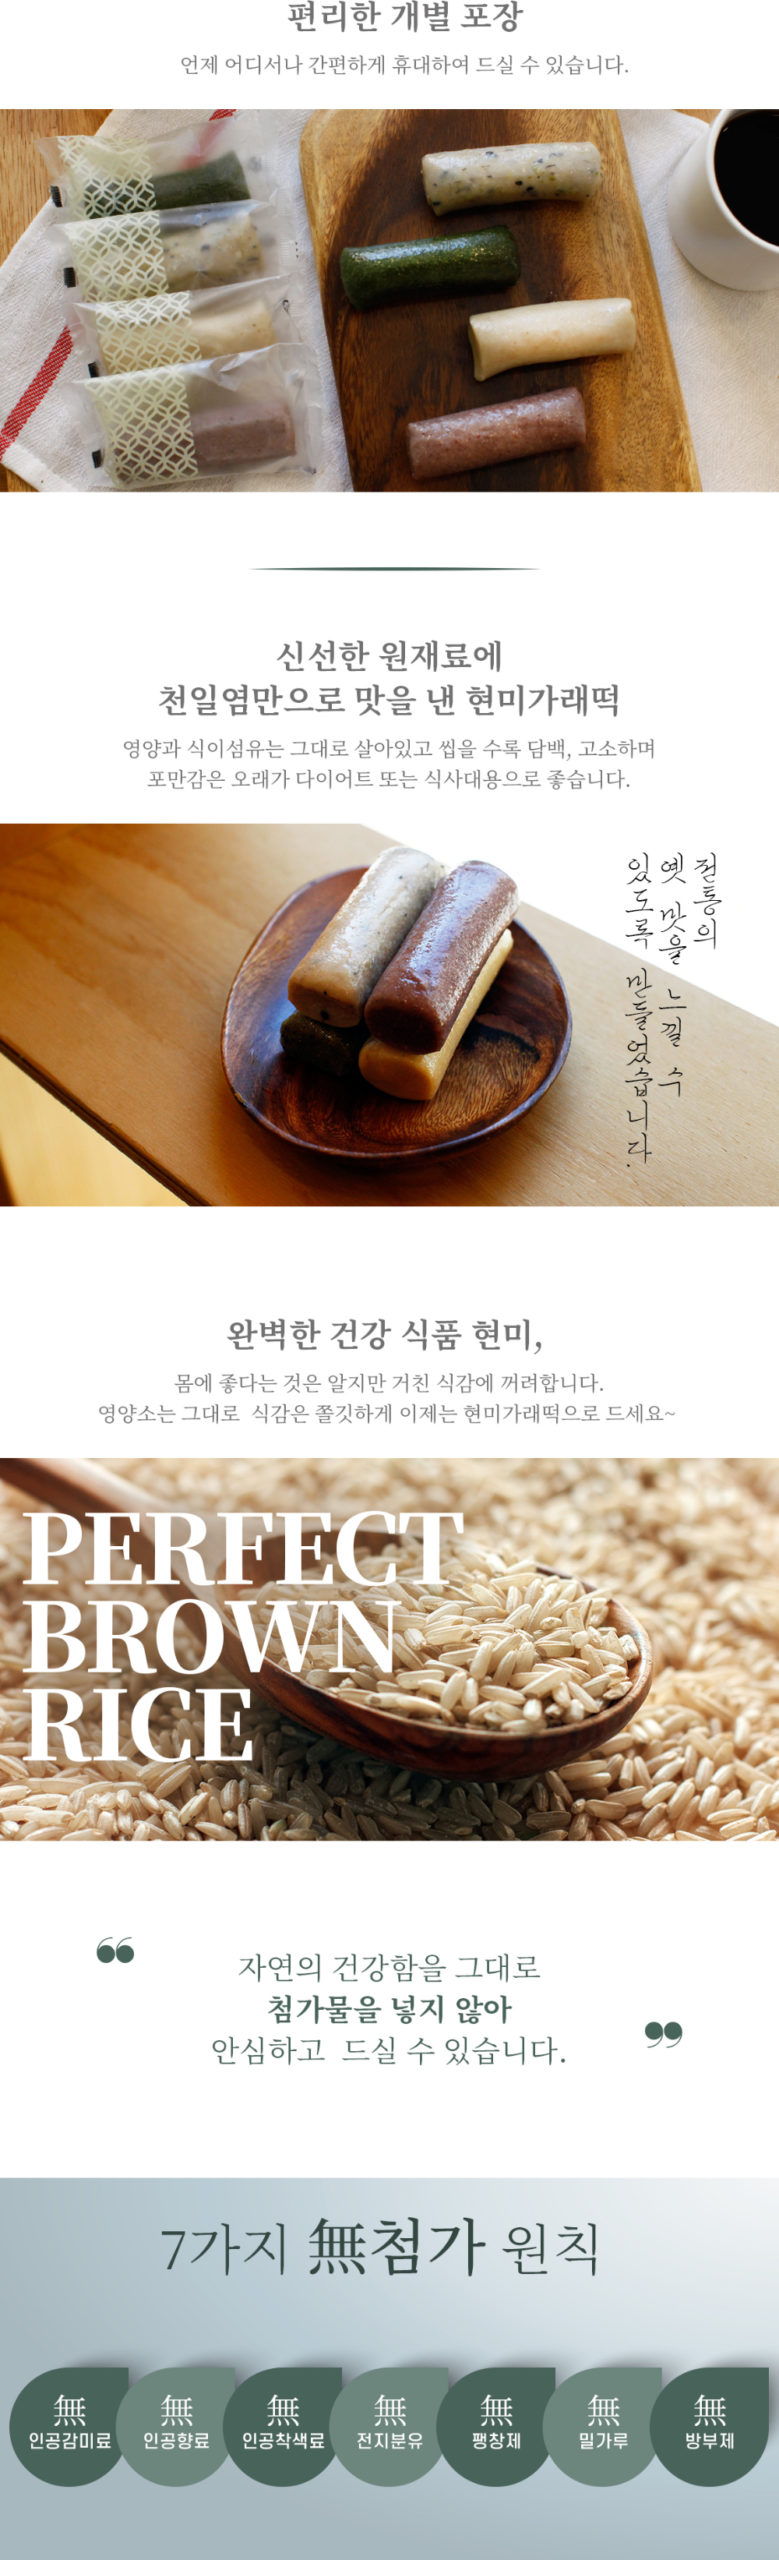 韓國食品-(Expiry Date: 28/6/2024)[Mauminga] Garaetteok[Black Bean&Brown Rice] 500g